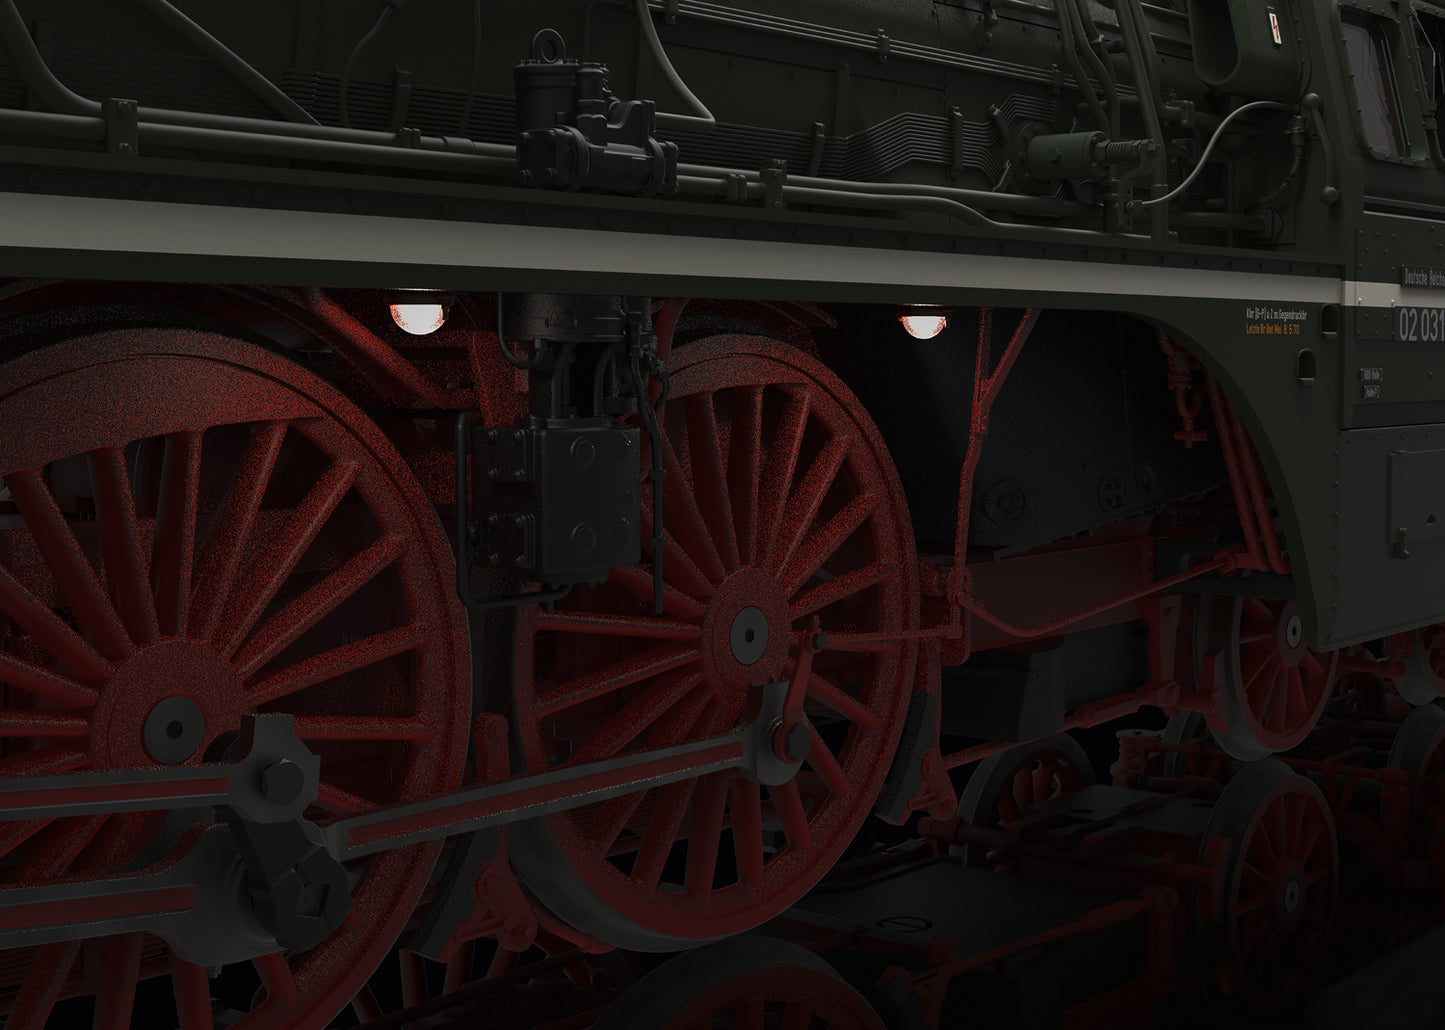 Marklin 55127 - Class 02 Steam Locomotive